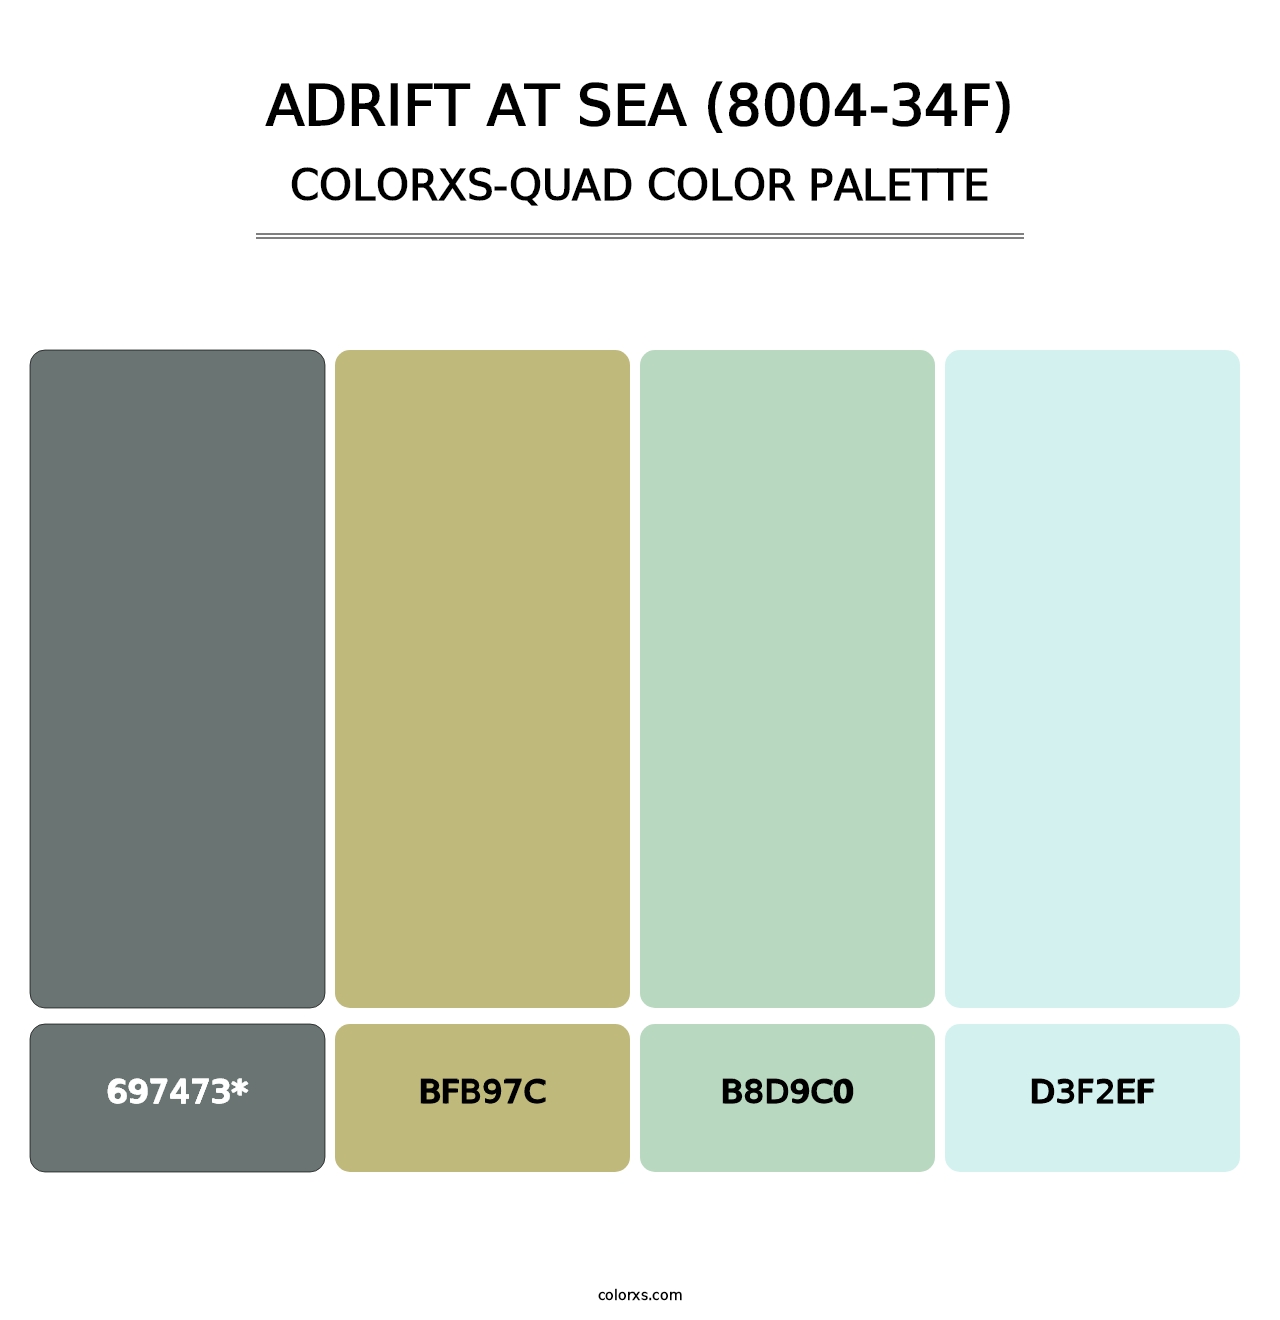 Adrift at Sea (8004-34F) - Colorxs Quad Palette